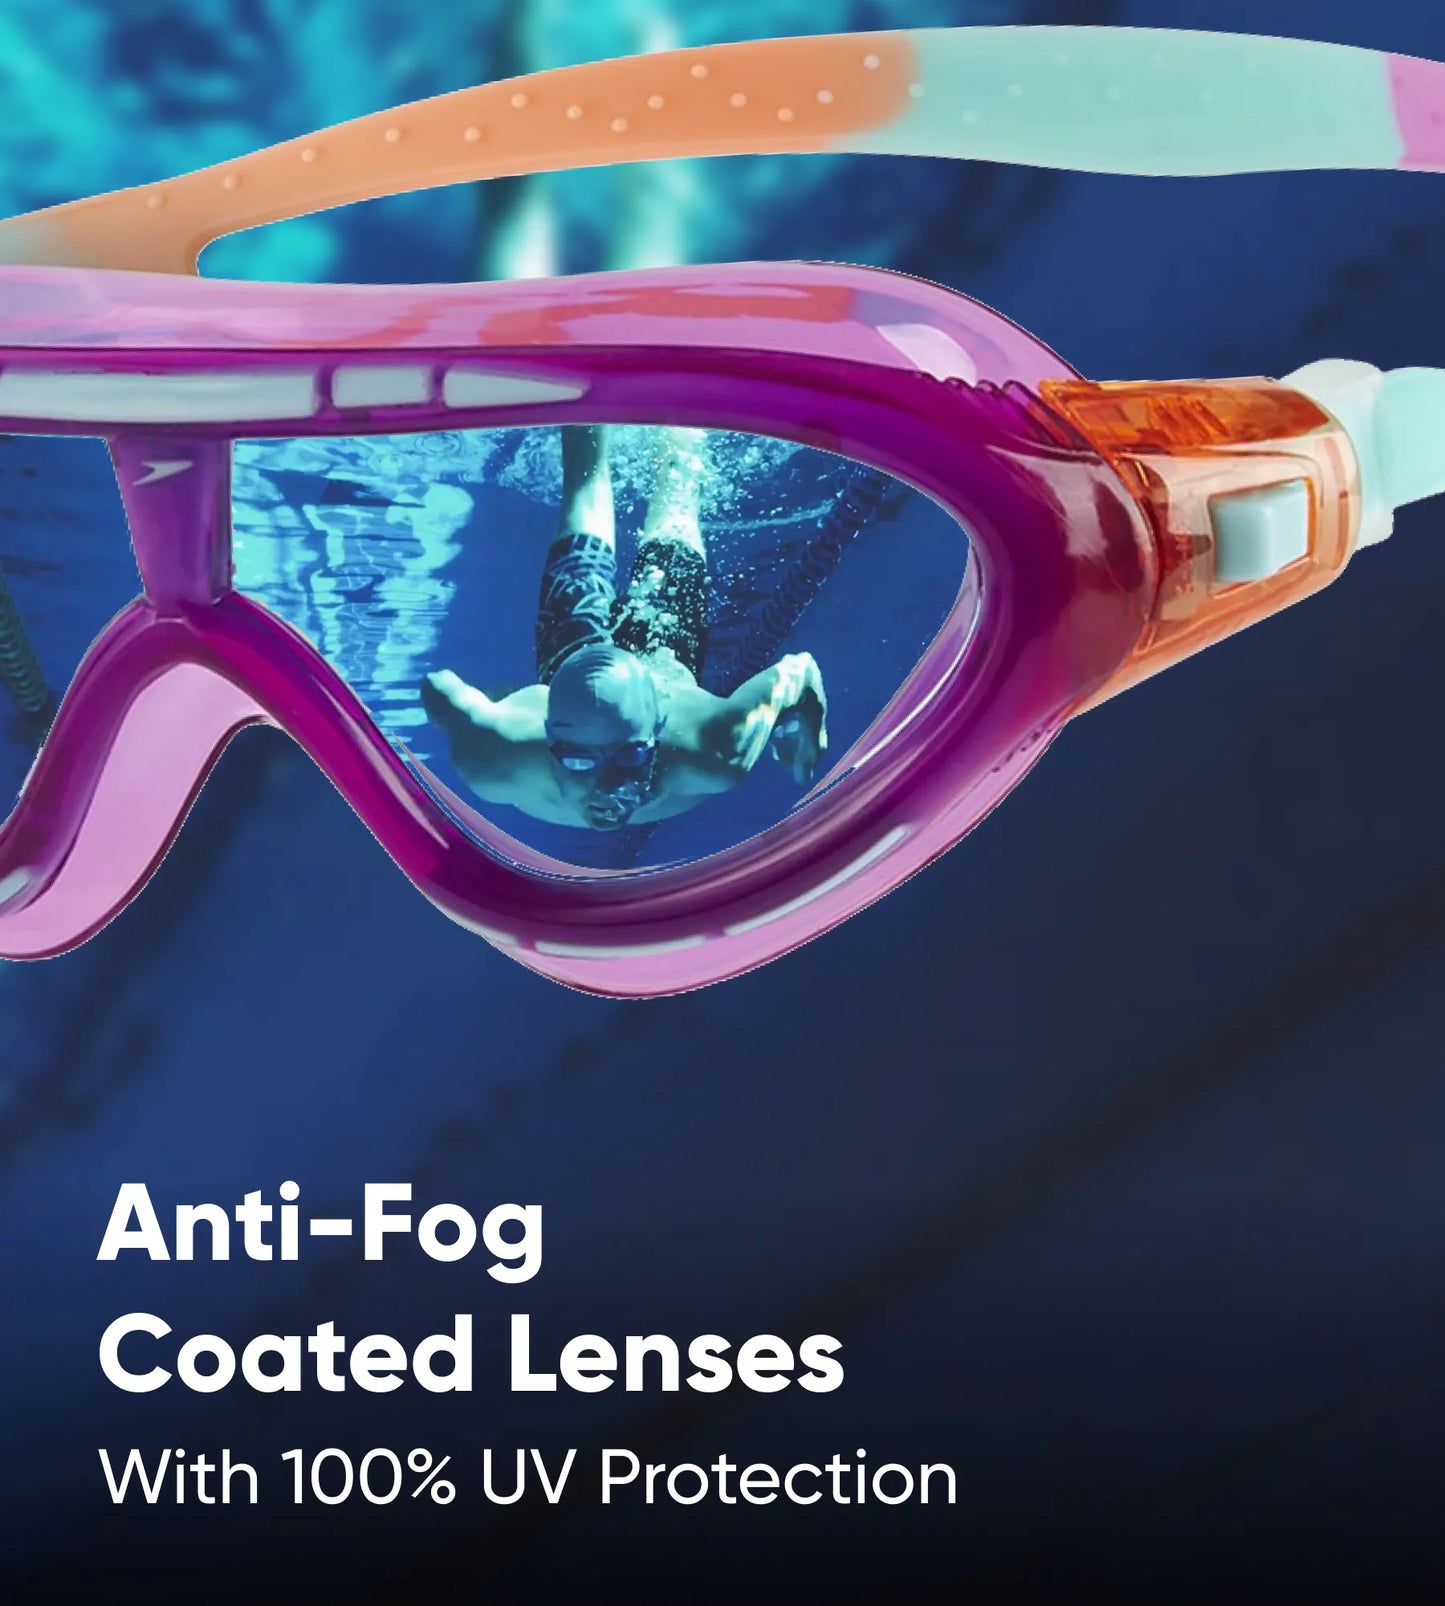 Unisex Junior Rift Clear-Lens Goggles - Lava Red & Beautiful Blue